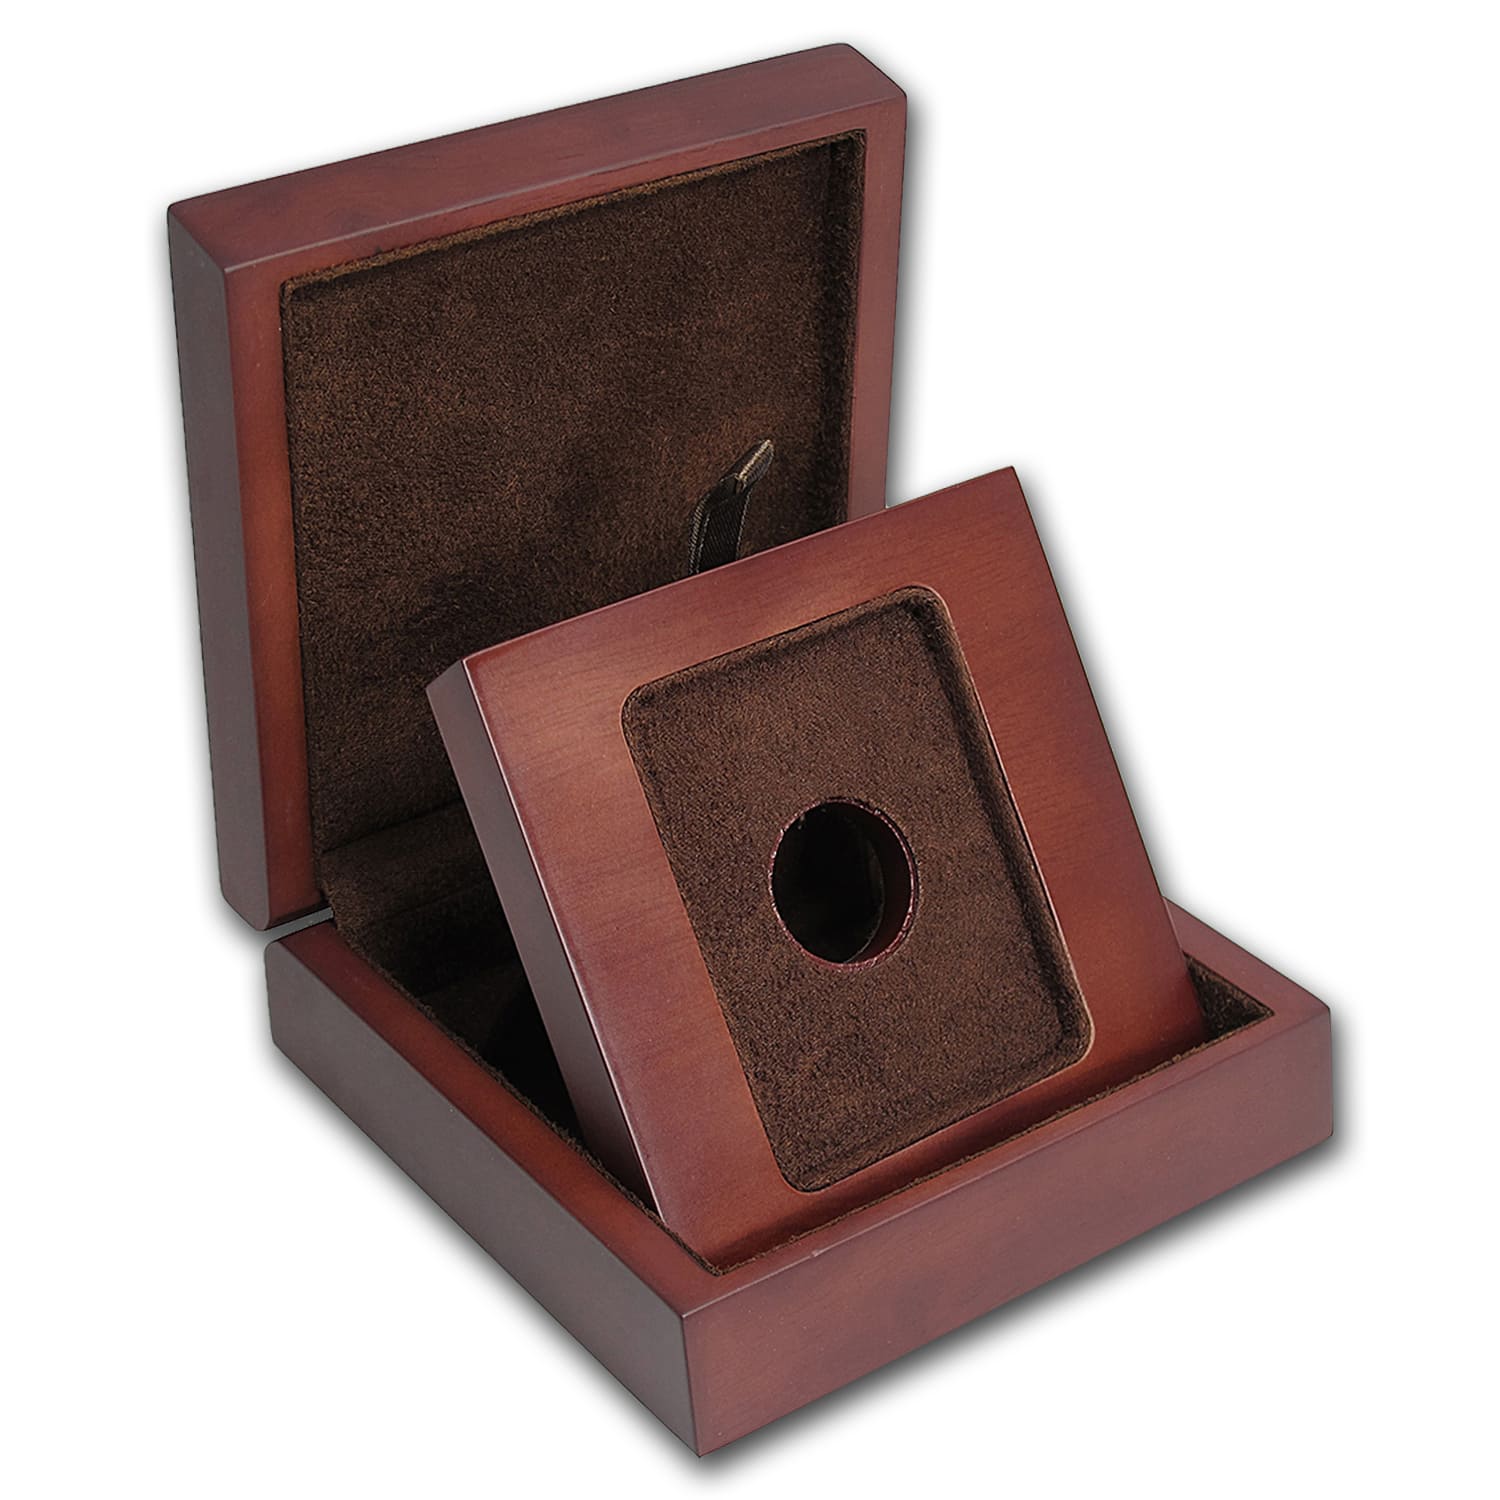 Buy APMEX Wood Gift Box - MintDirect? Single in TEP